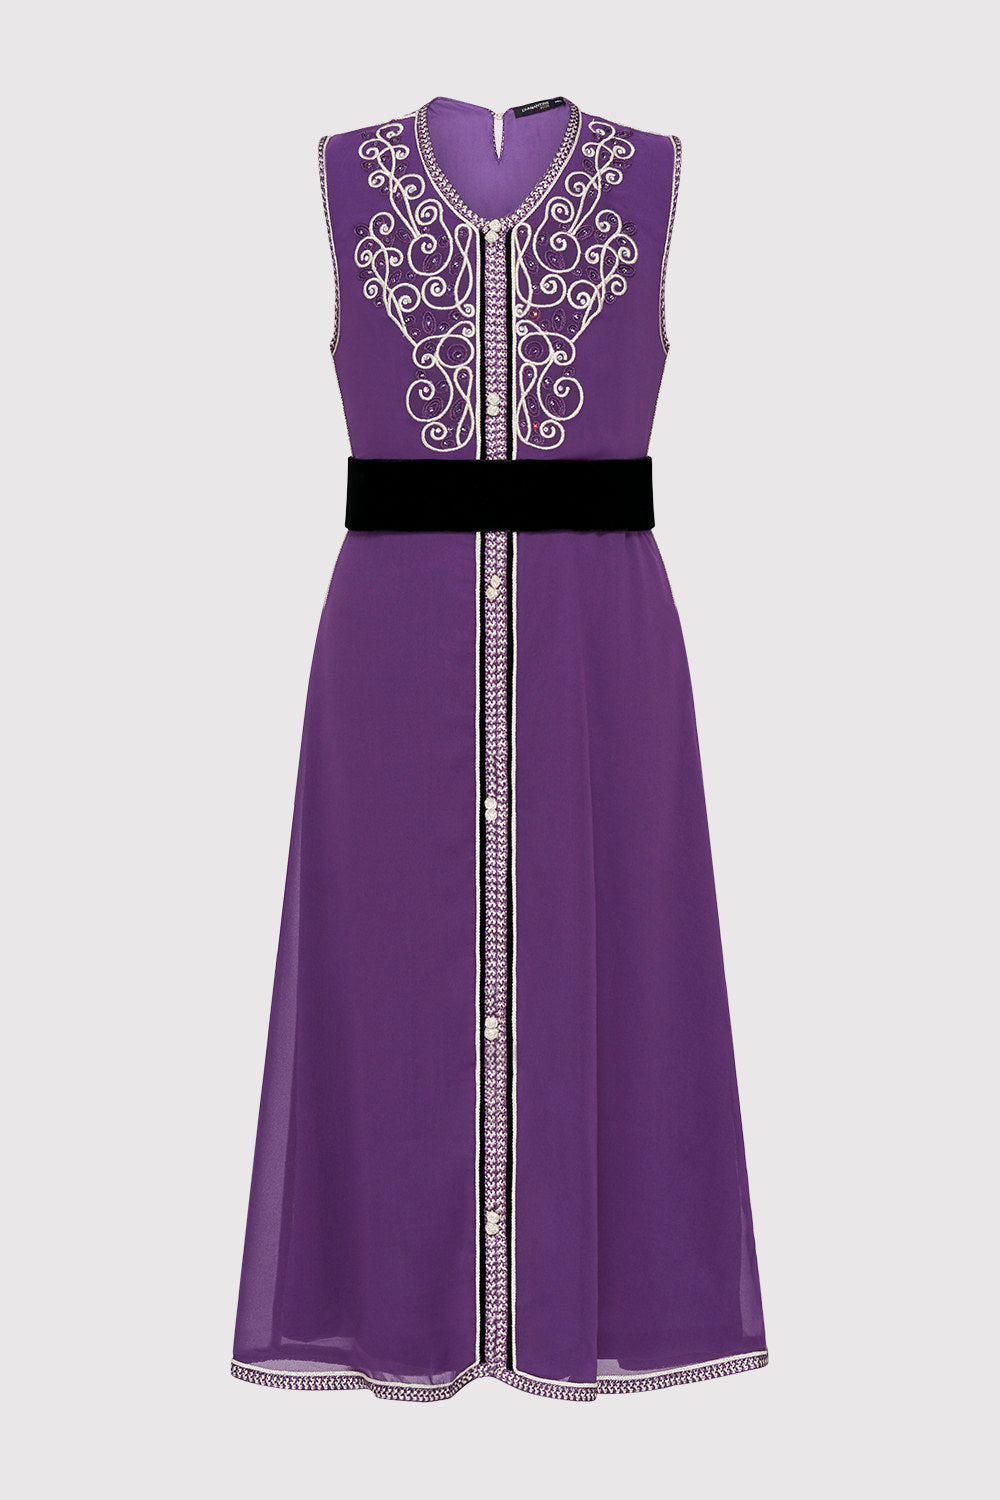 Kaftan Aryame Girl's Sleeveless Occasion Wear Party Dress and Waist Belt in Purple (2-12yrs)